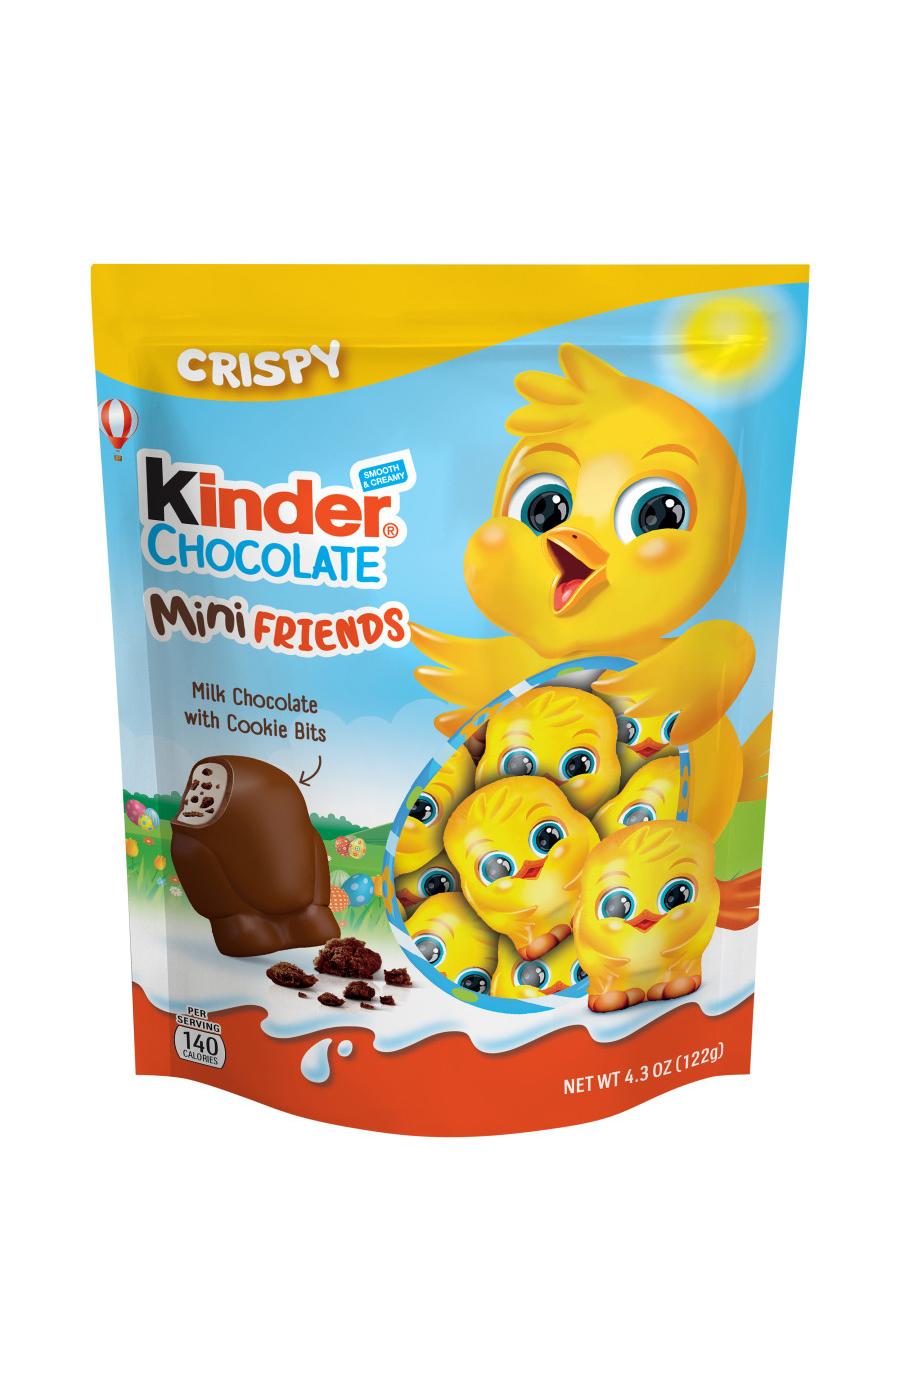 Kinder Crispy Chocolate Mini Friends Easter Candy